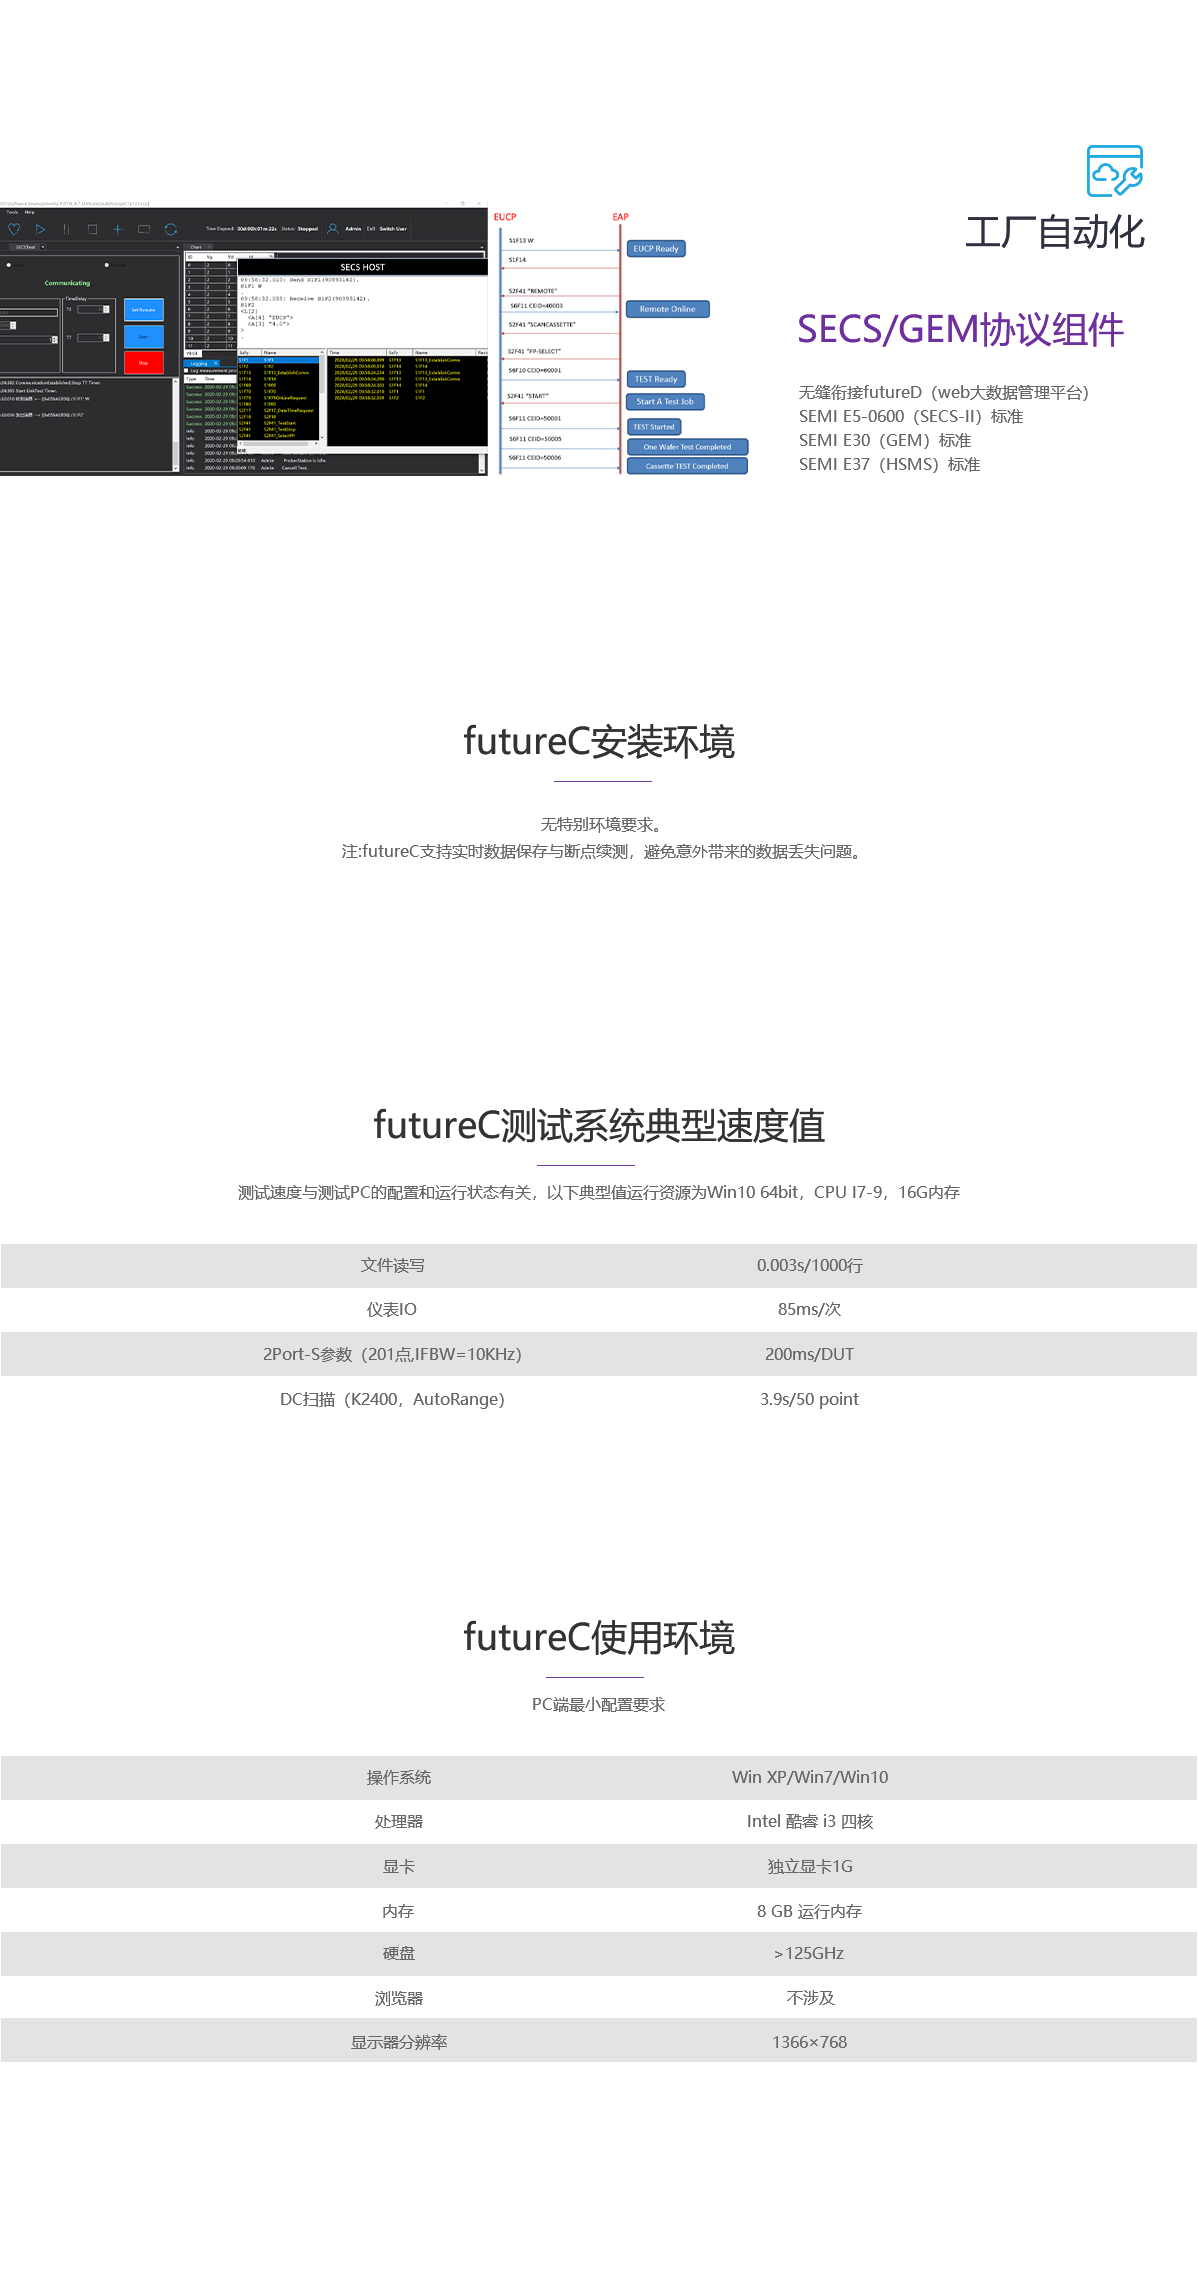 future-C产品详情页_06.png